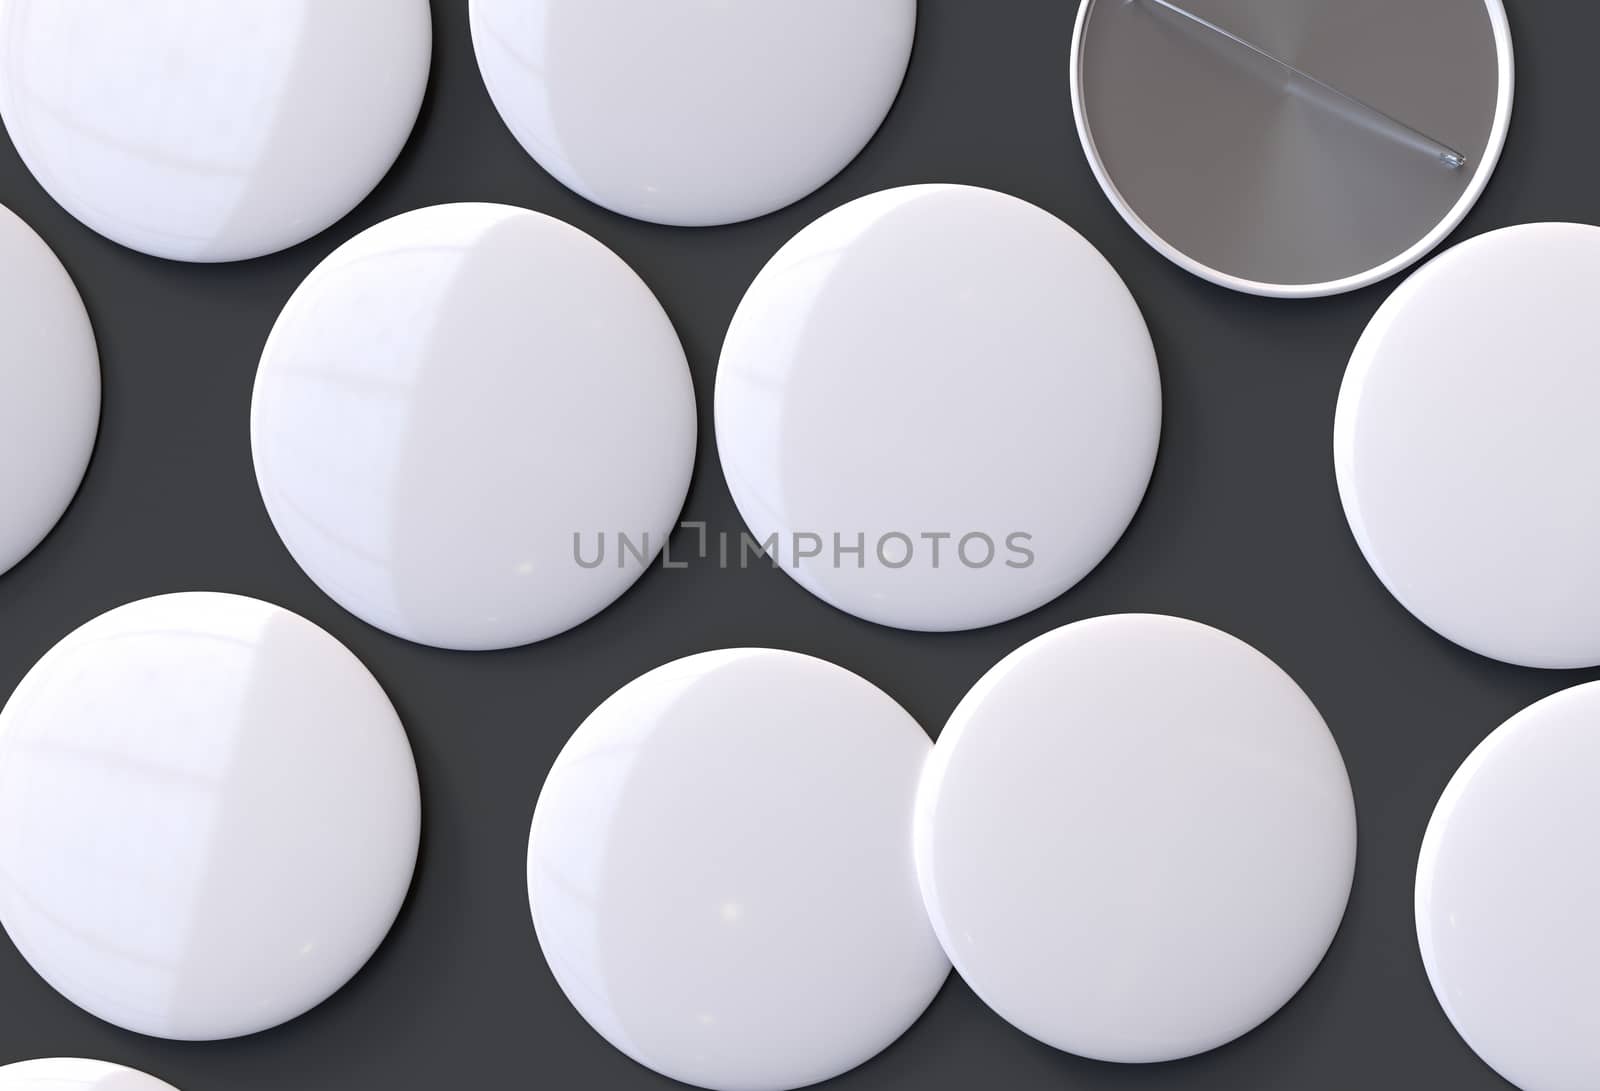 Blank white badges by Barbraford